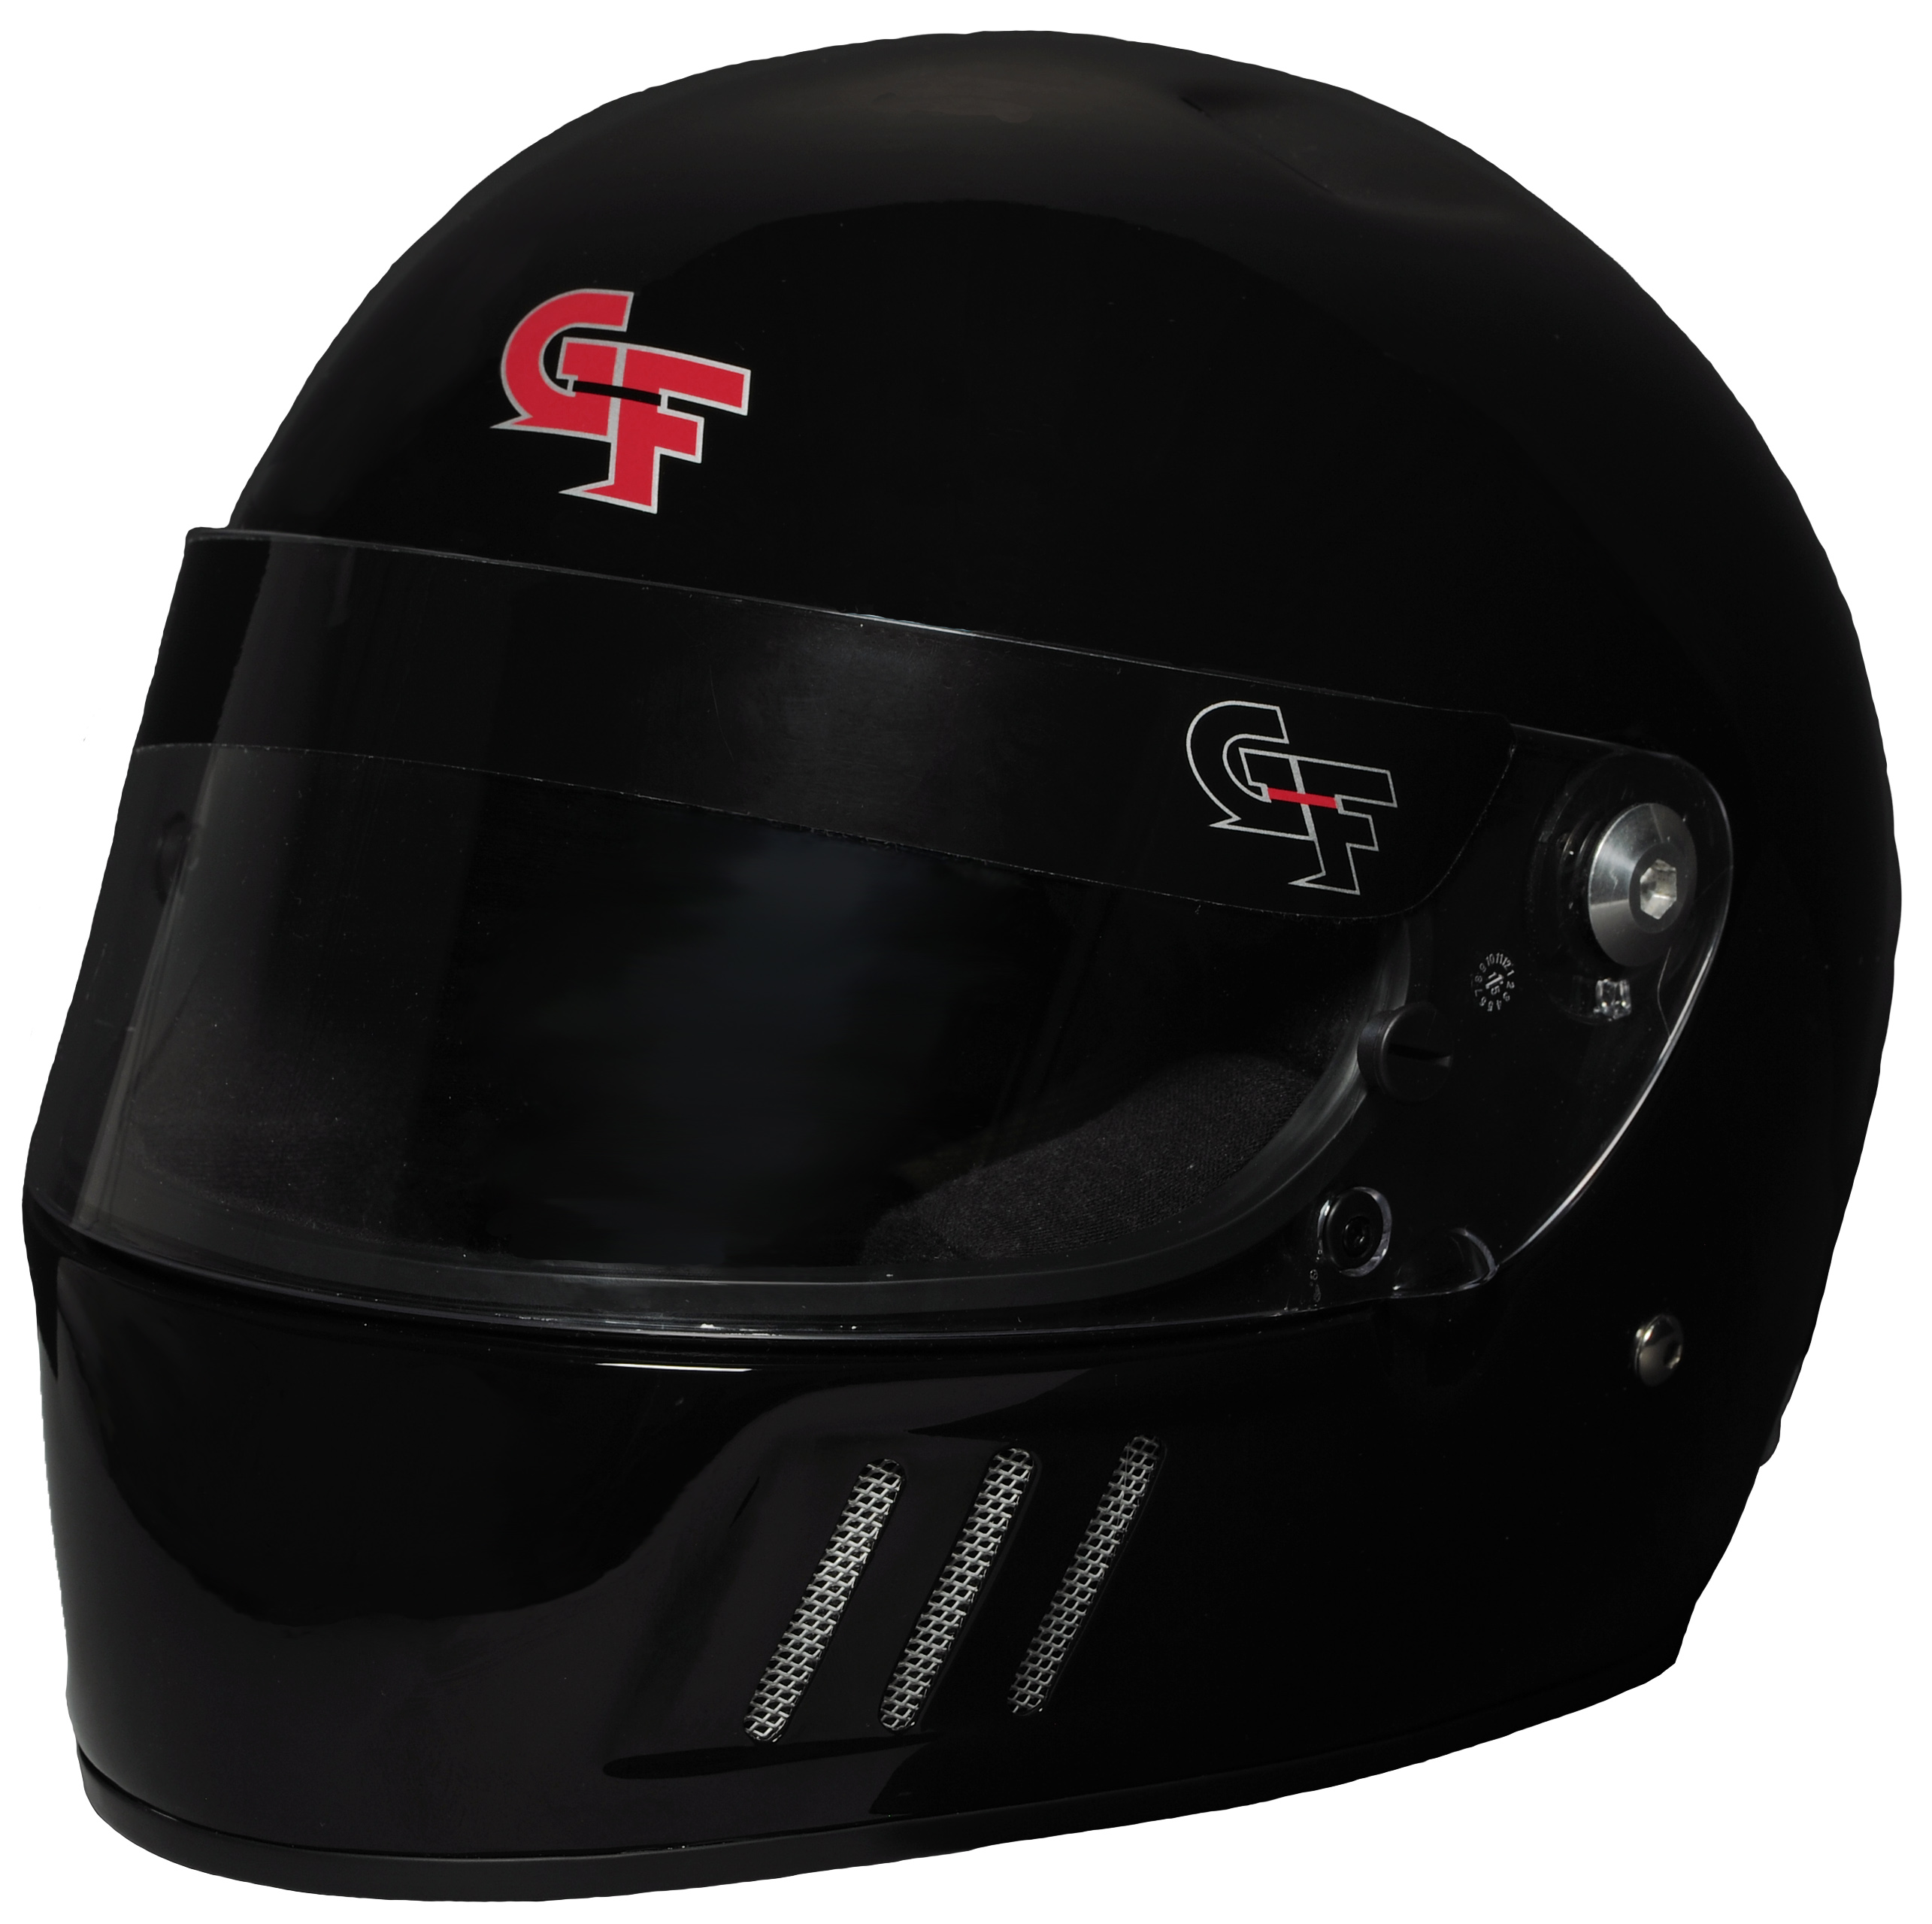 G-Force Racing Gear Helmet, GF3 FULL FACE LRG BLACK SA2015